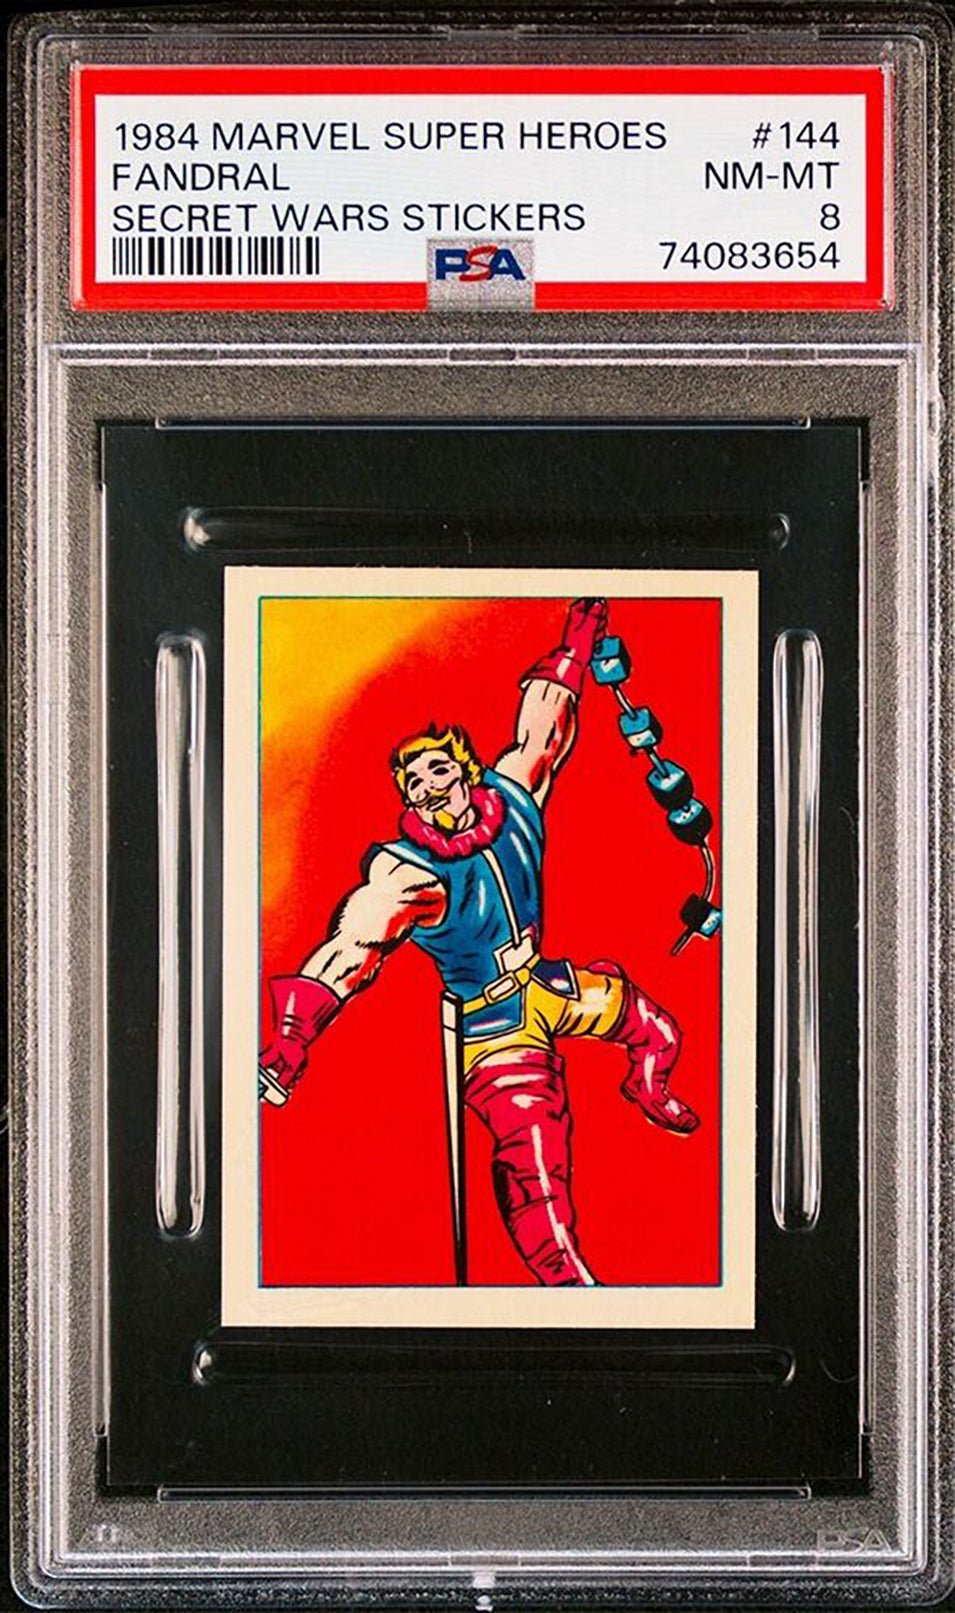 FANDRAL PSA 8 1984 Marvel Super Heroes Secret Wars Stickers #144 Marvel Graded Cards Sticker - Hobby Gems